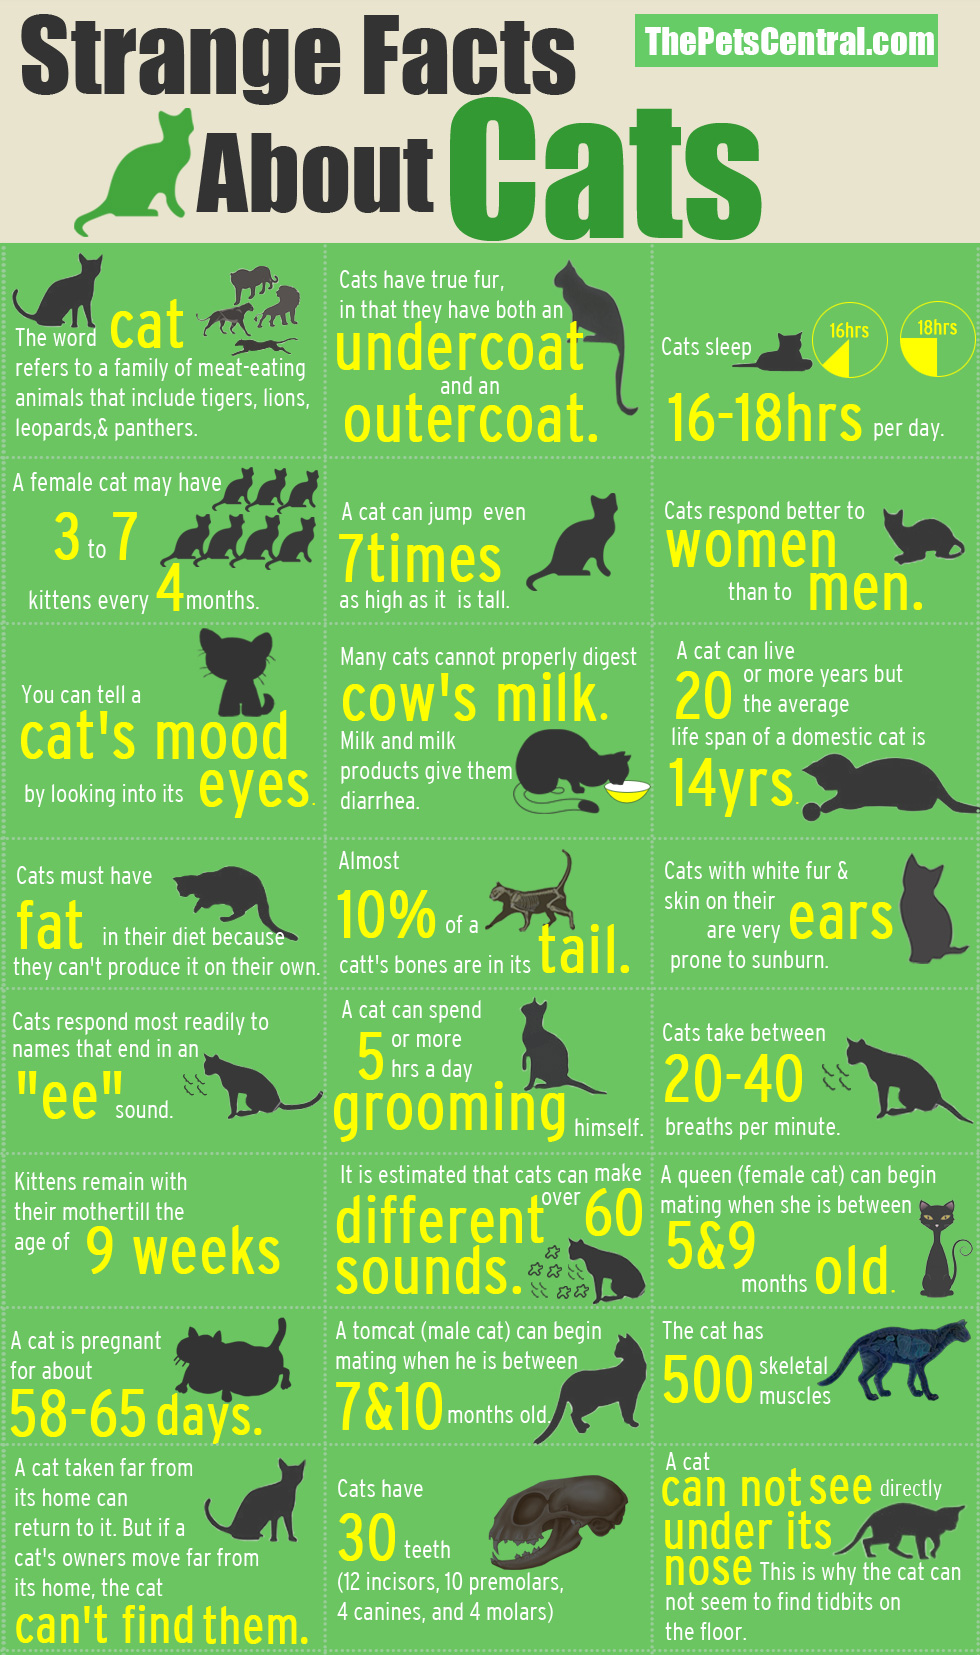 Animal Infographic